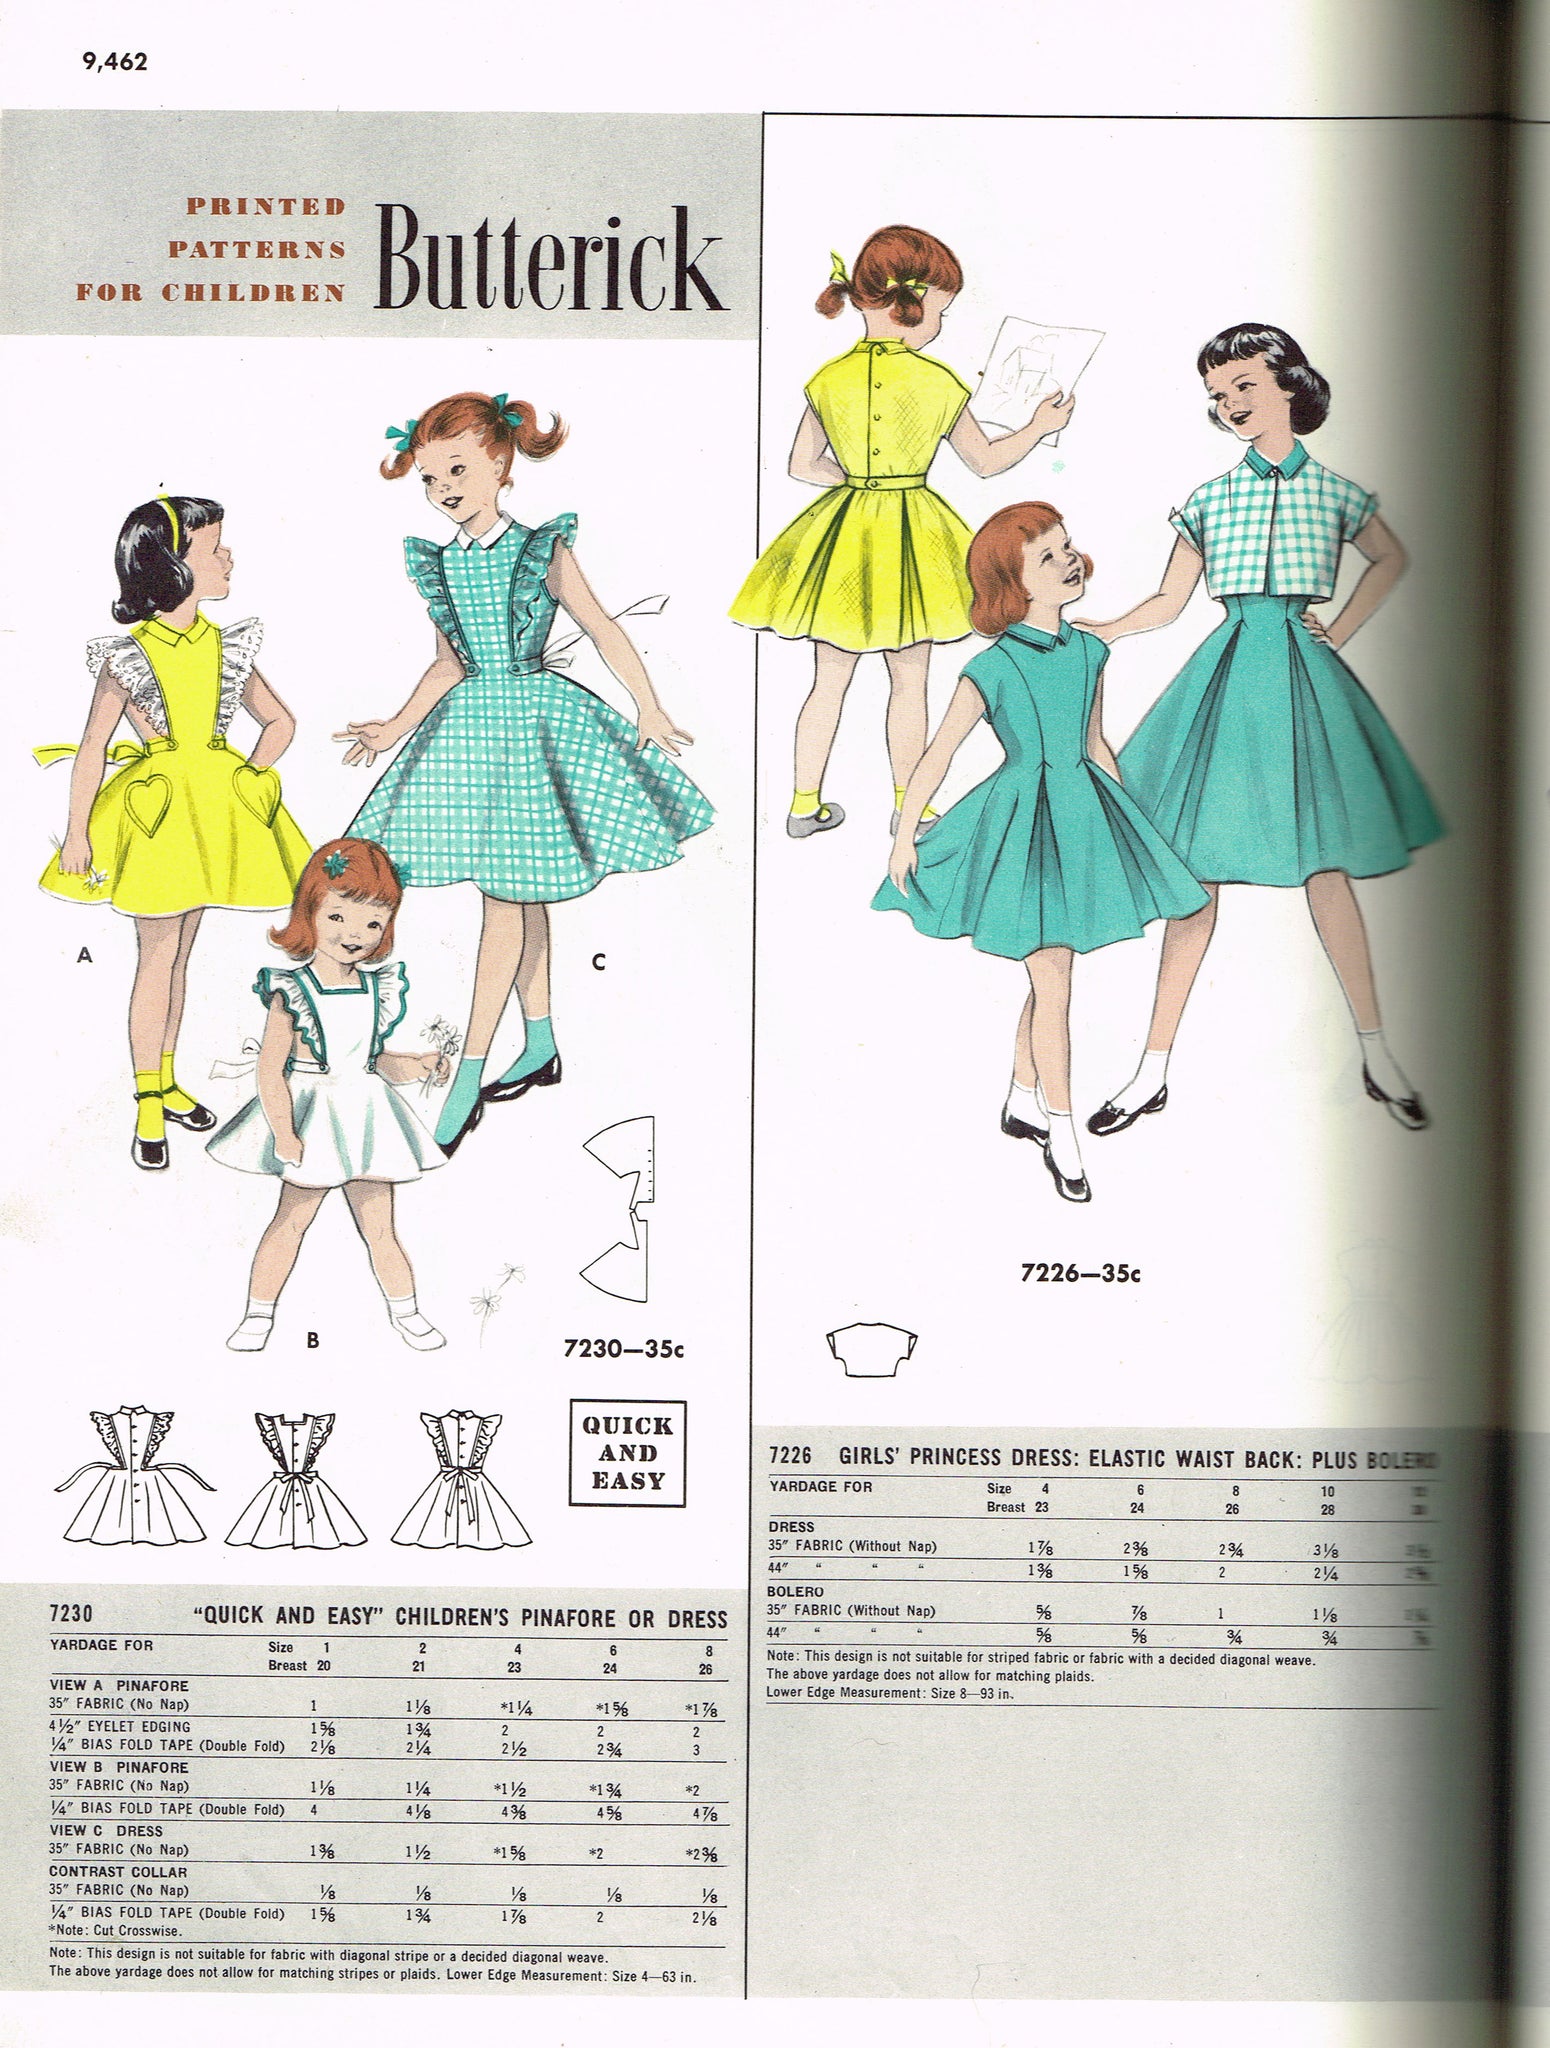 Butterick 5684 Girls' Top, Skirt, Petticoat, Size 12-14, Uncut